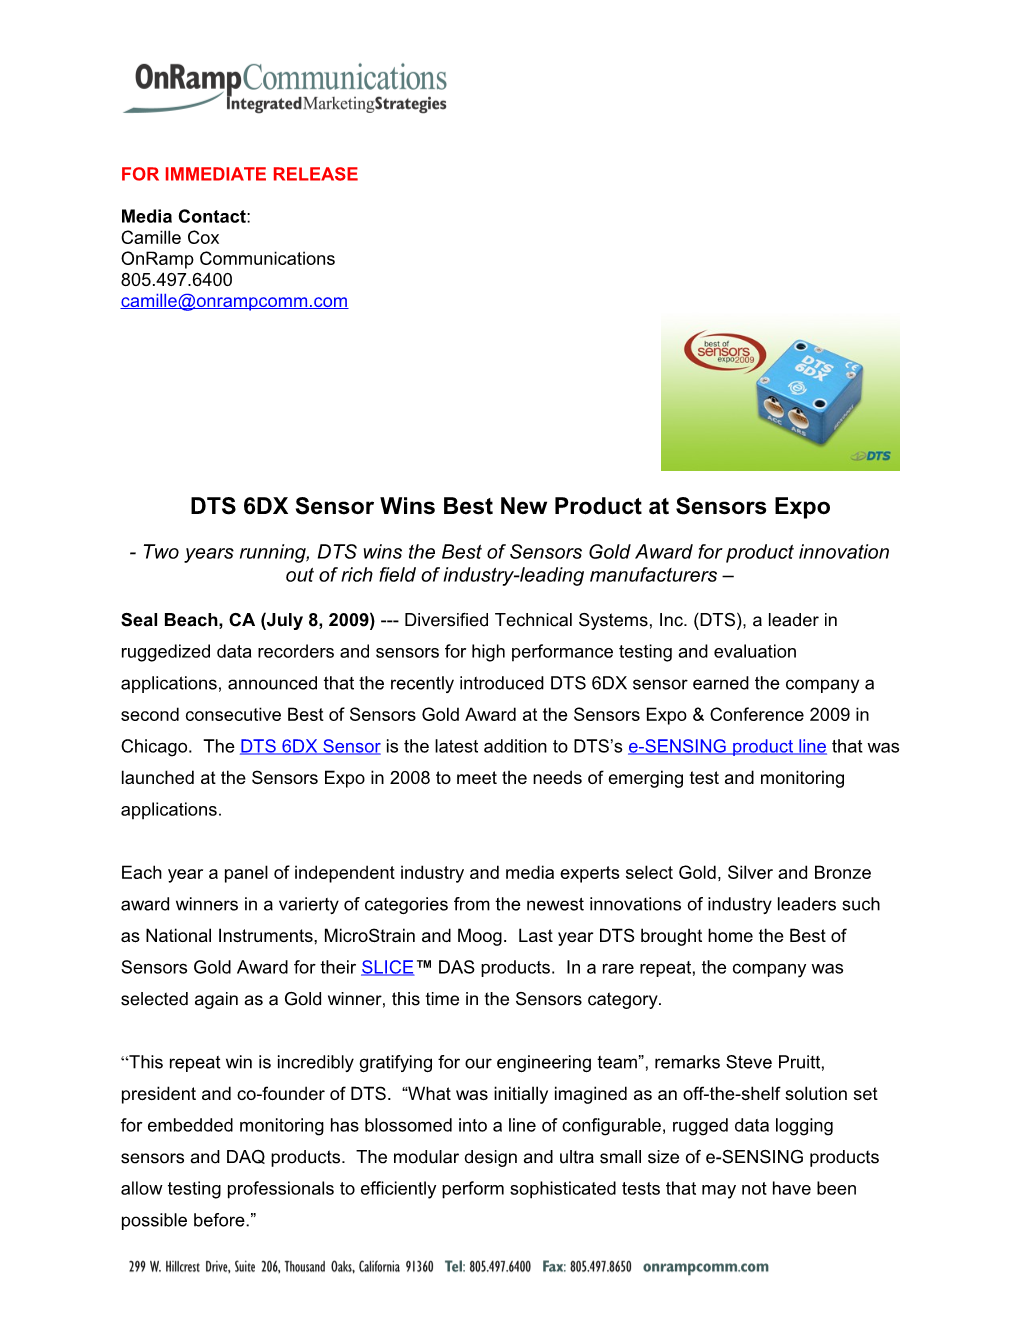 DTS 6DX Sensor Best New Product at Sensors Expo 2009